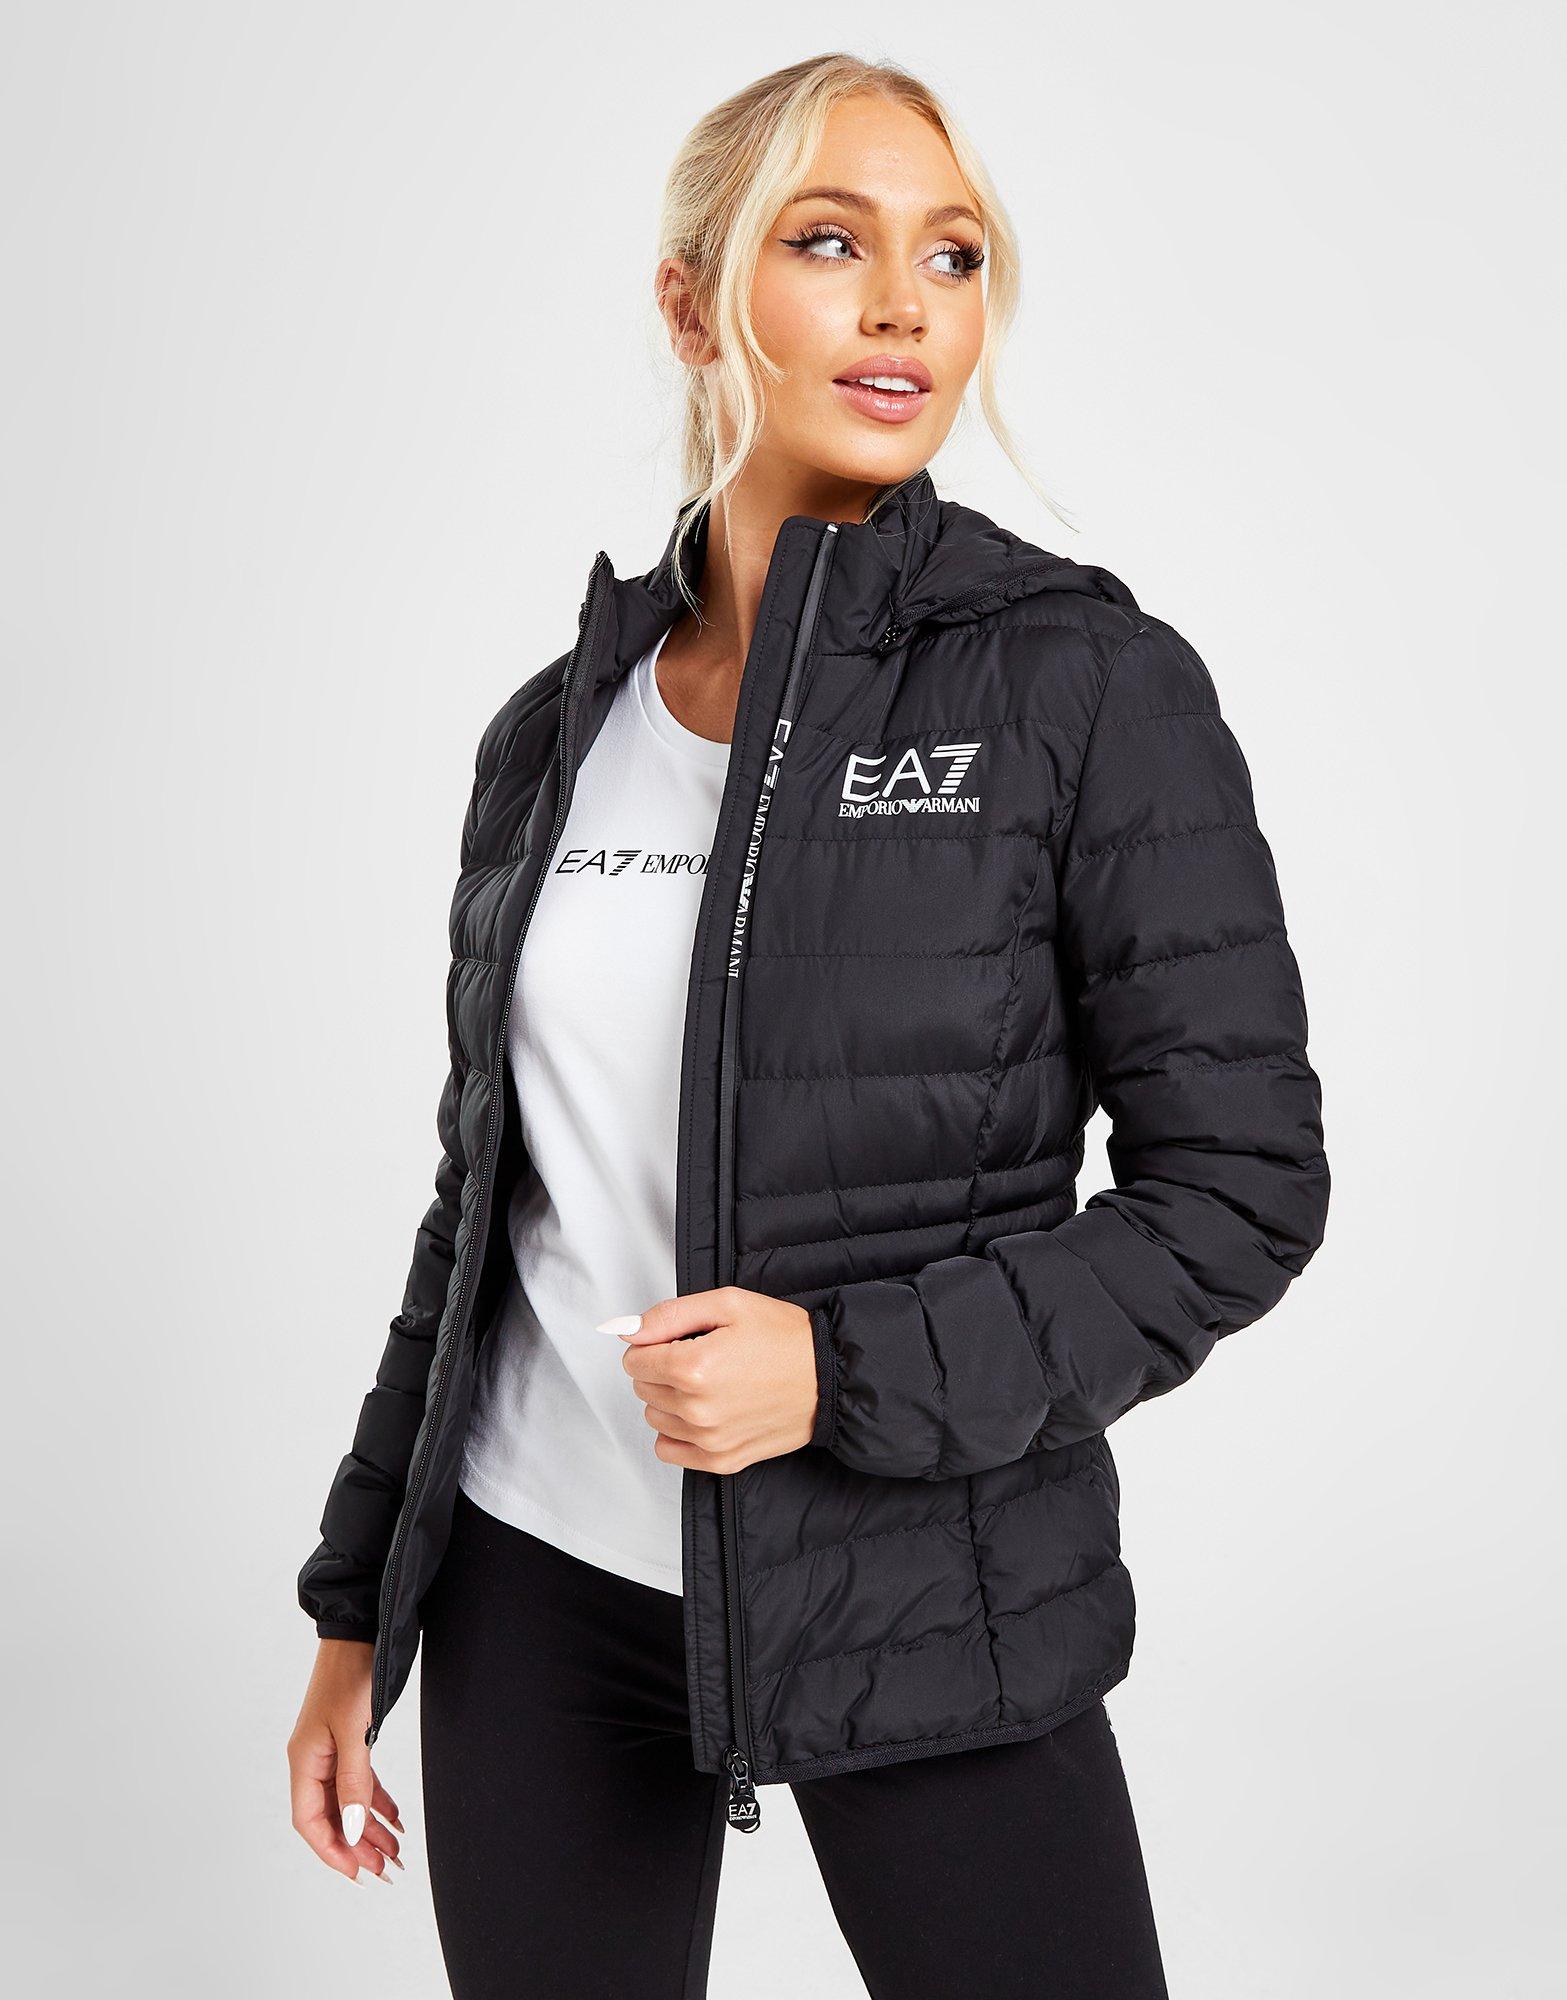 Kano Poging Ruwe slaap Emporio Armani EA7 Logo Zip Jacket